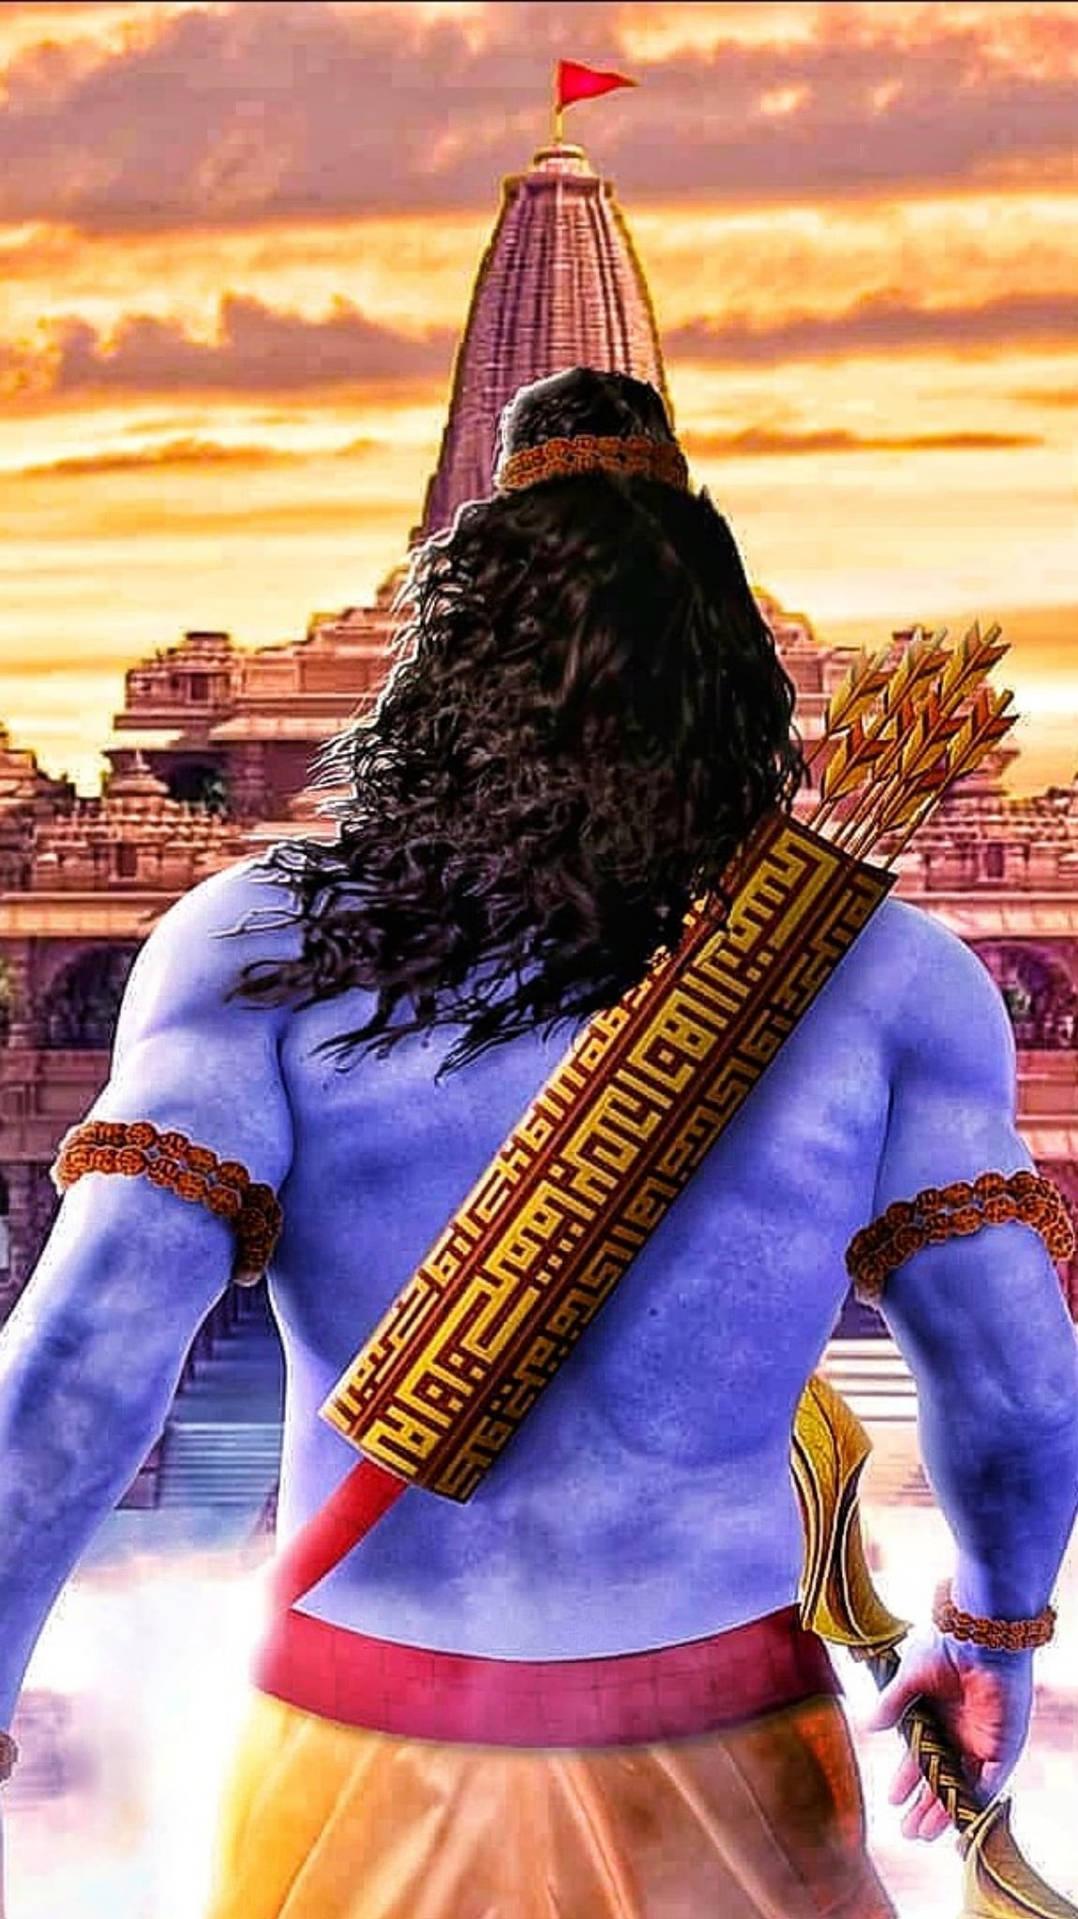 Hinduism Gods 4k HD Wallpapers Rama Navami Images Photos at Divyatattva